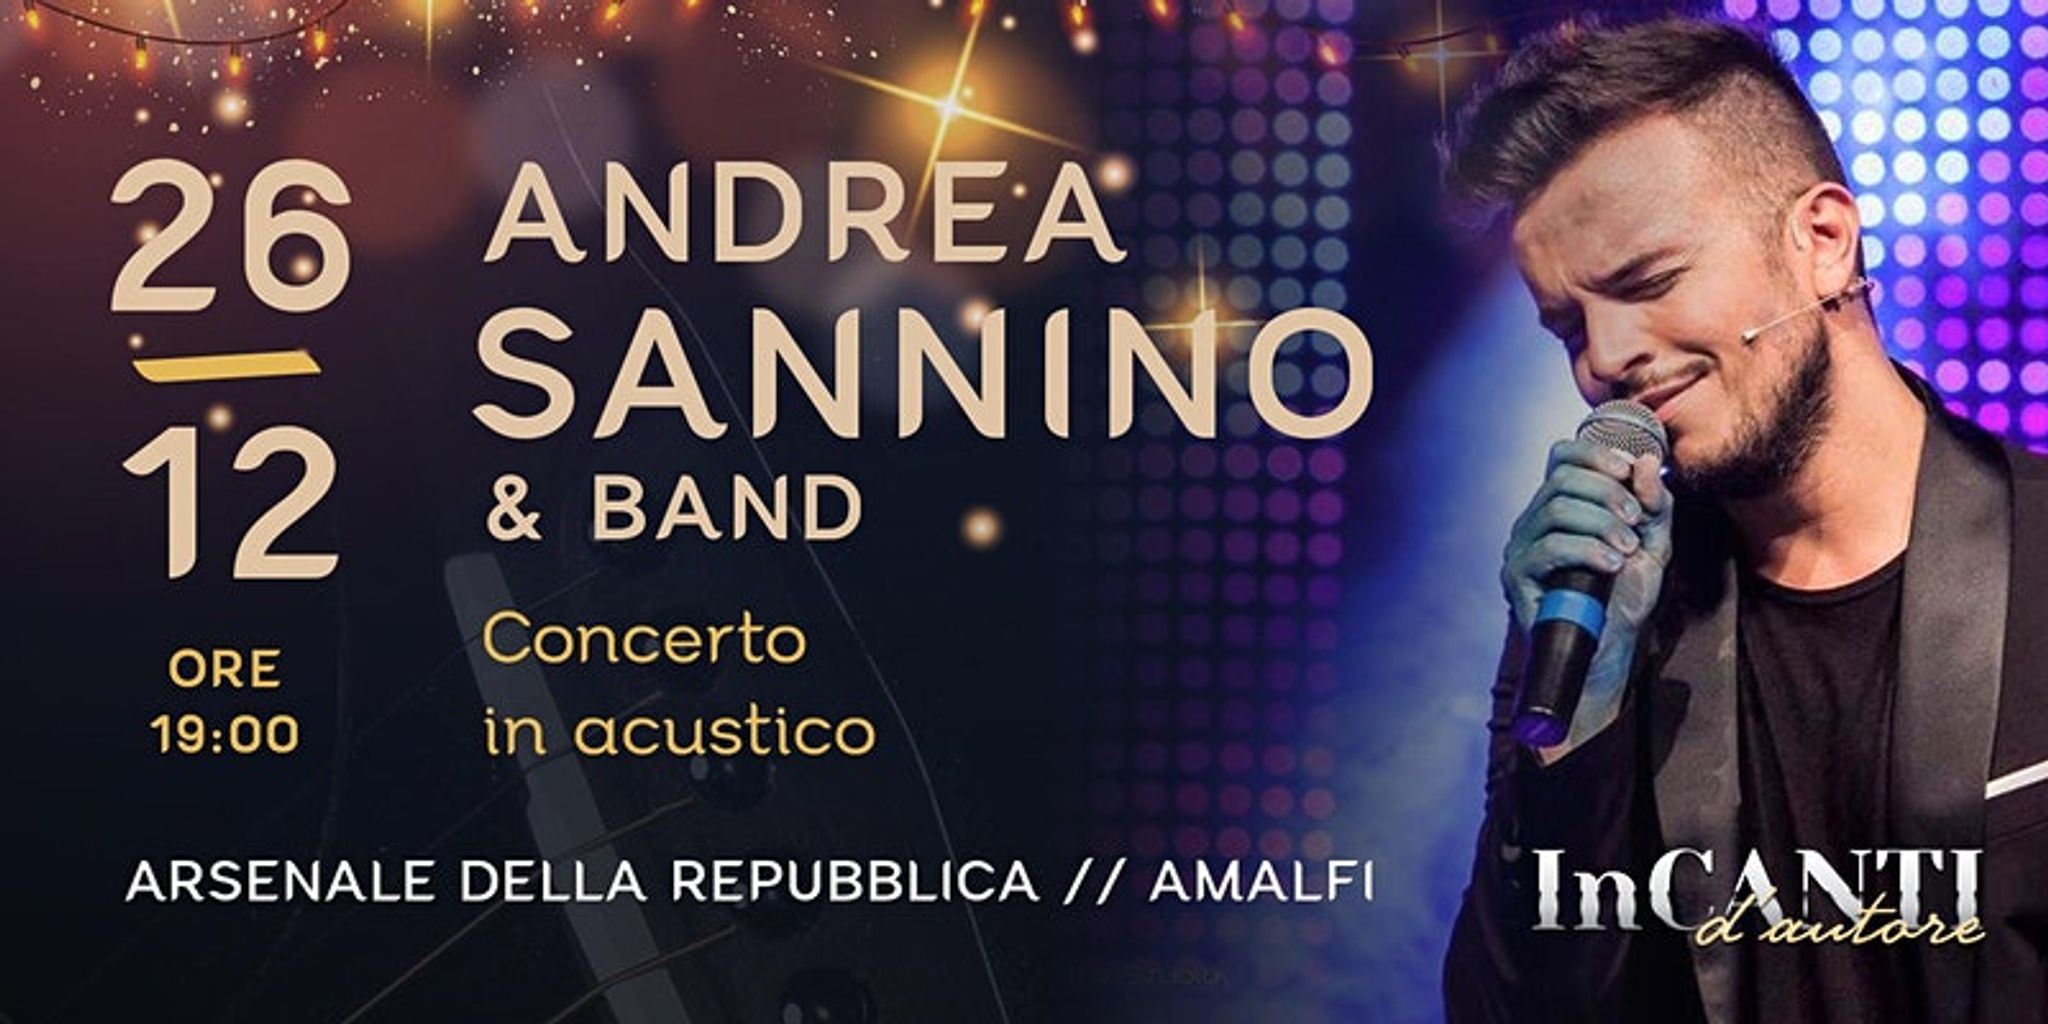 Andrea Sannino & Band